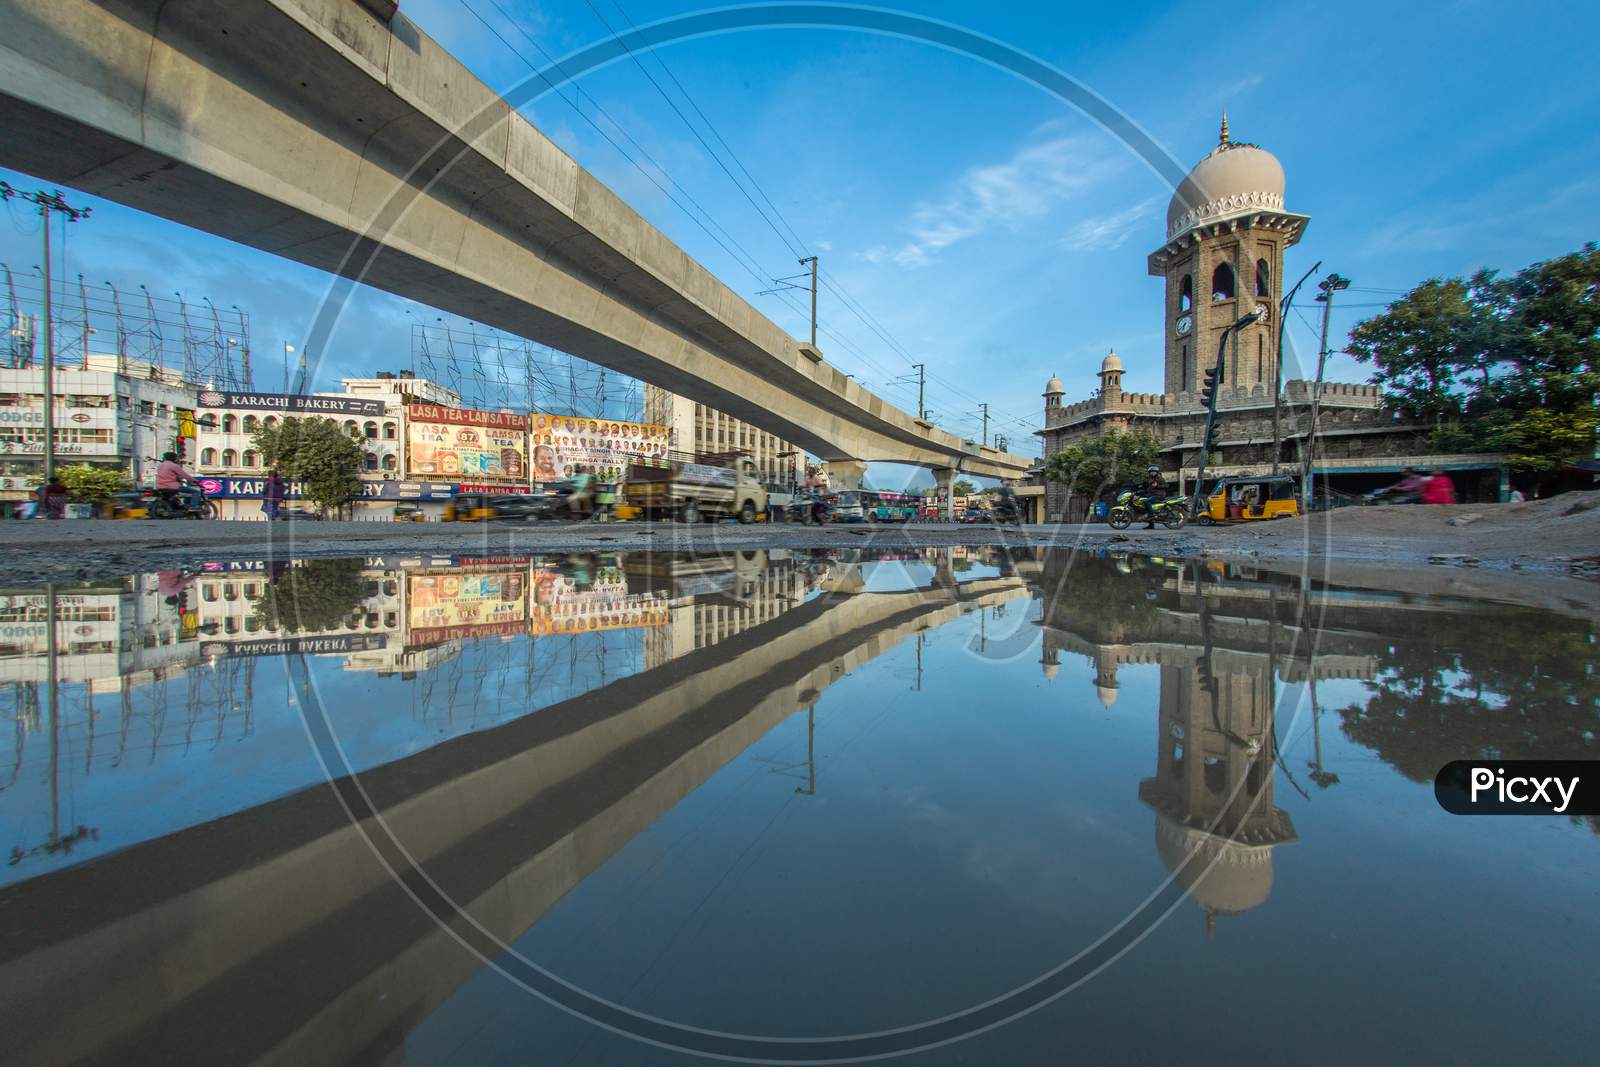 Reflection of Metro Rail Bridge in the water